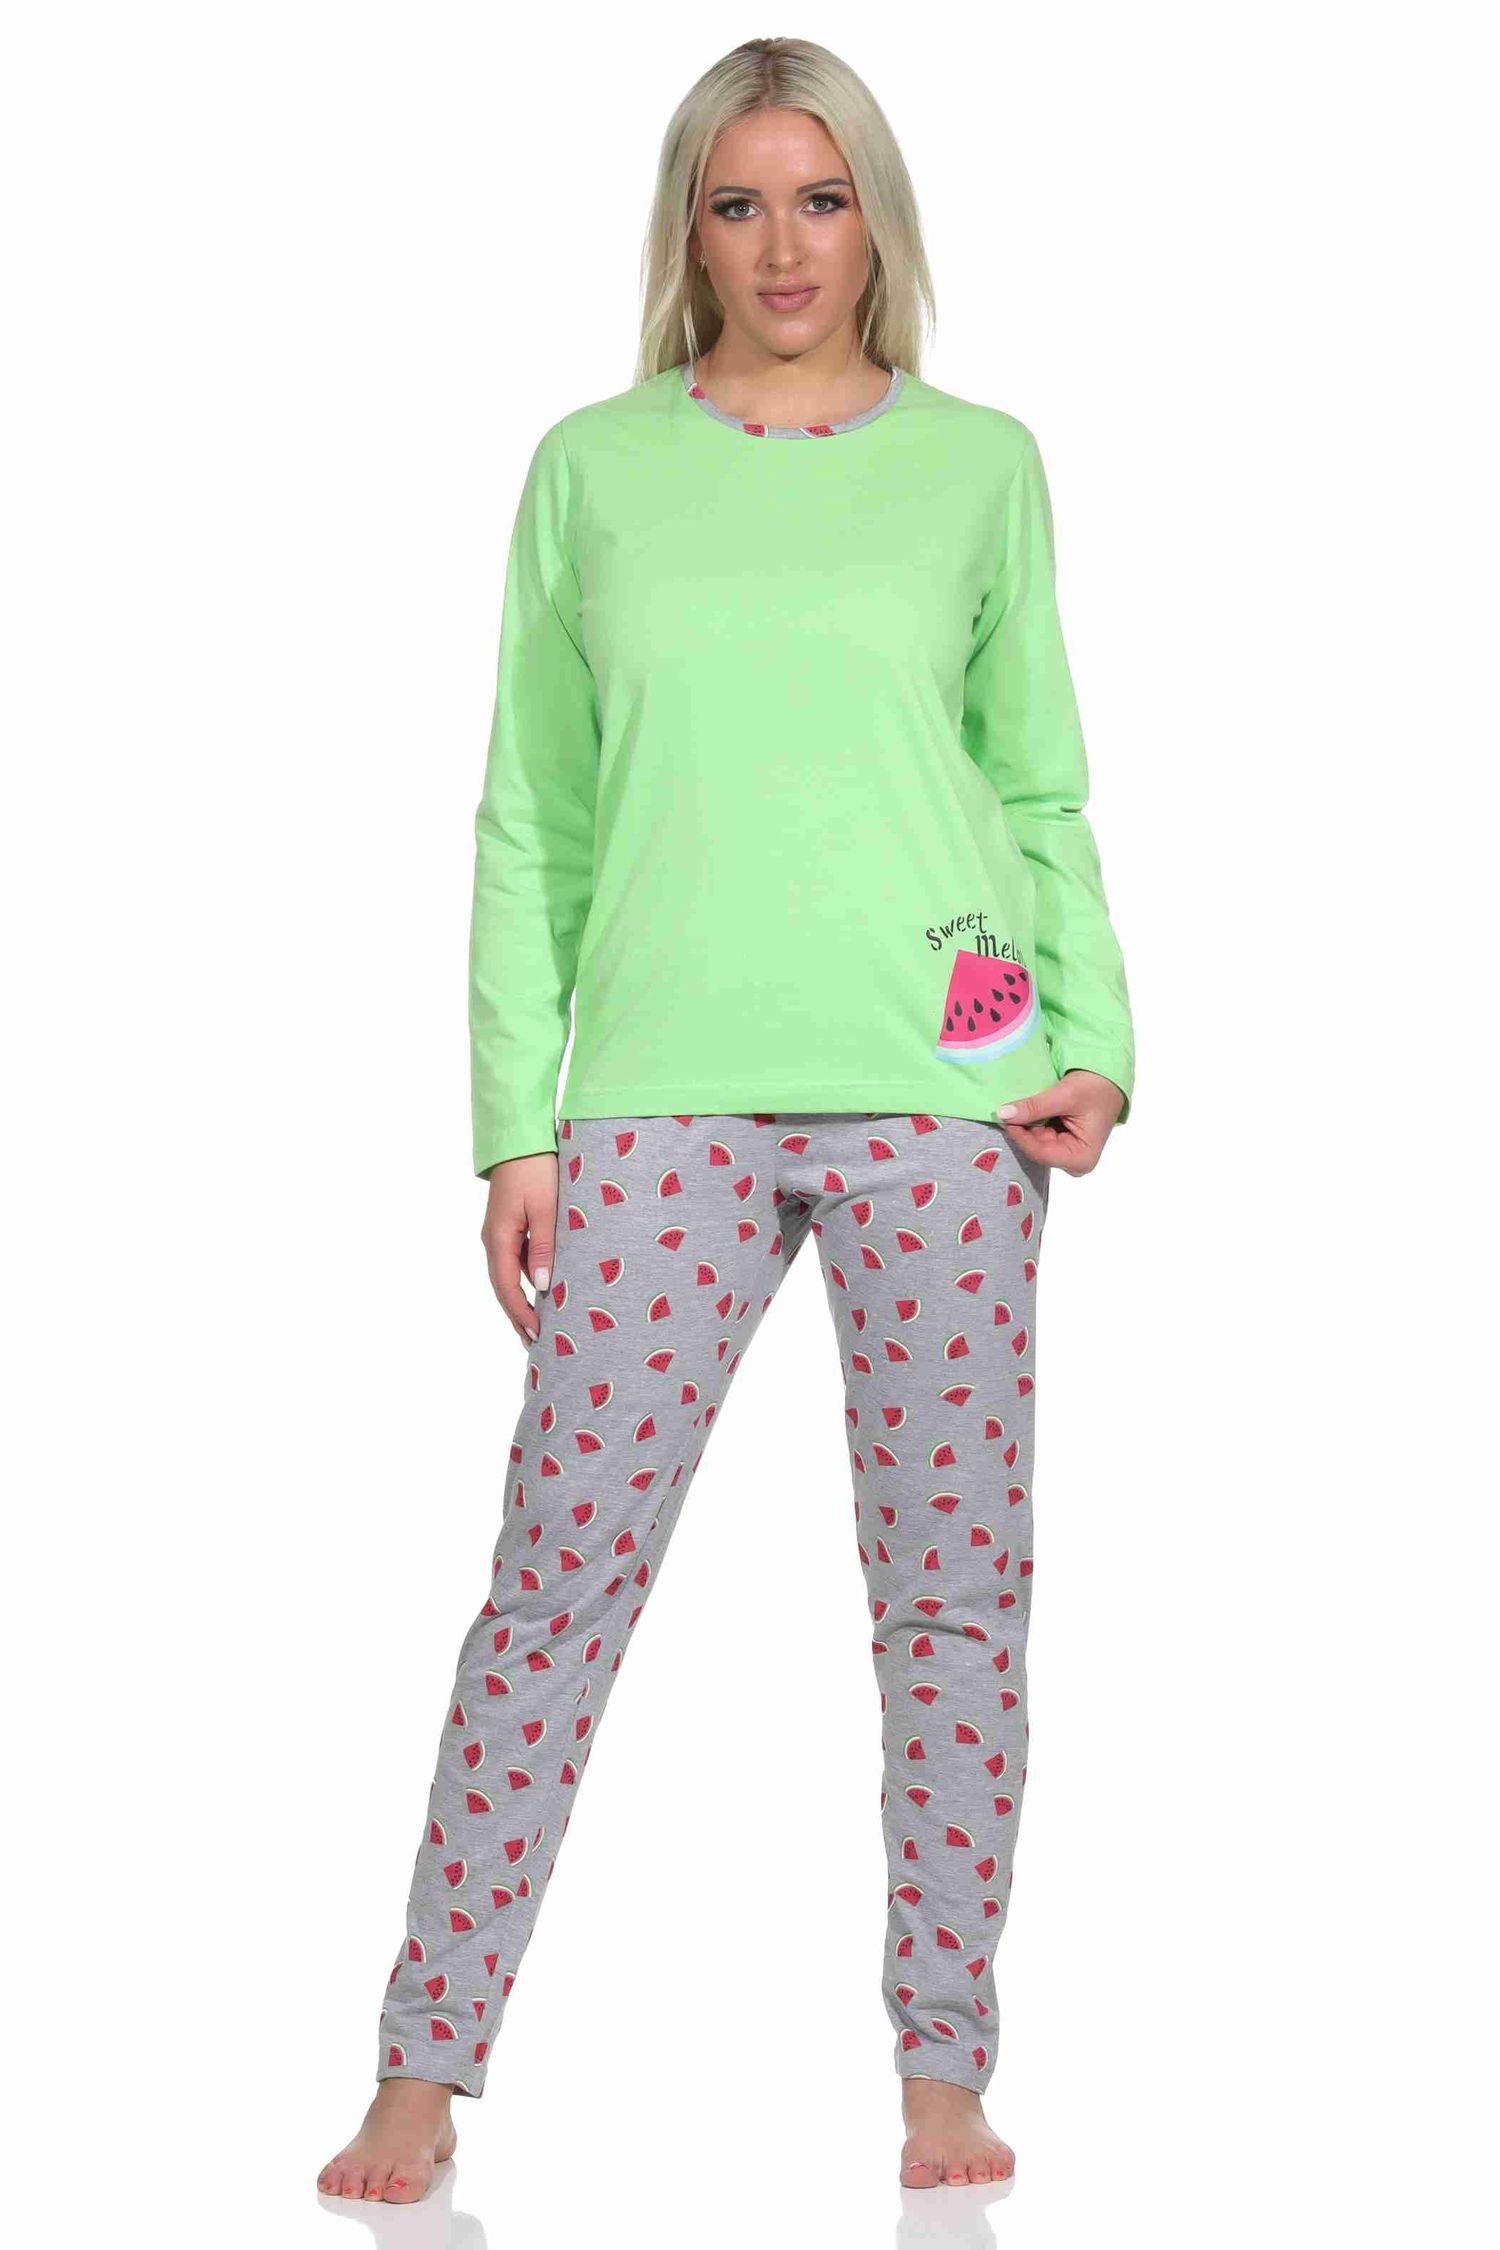 Normann Pyjama Damen Schlafanzug als allover grün Hose bedruckt Melone lang Motiv, mit